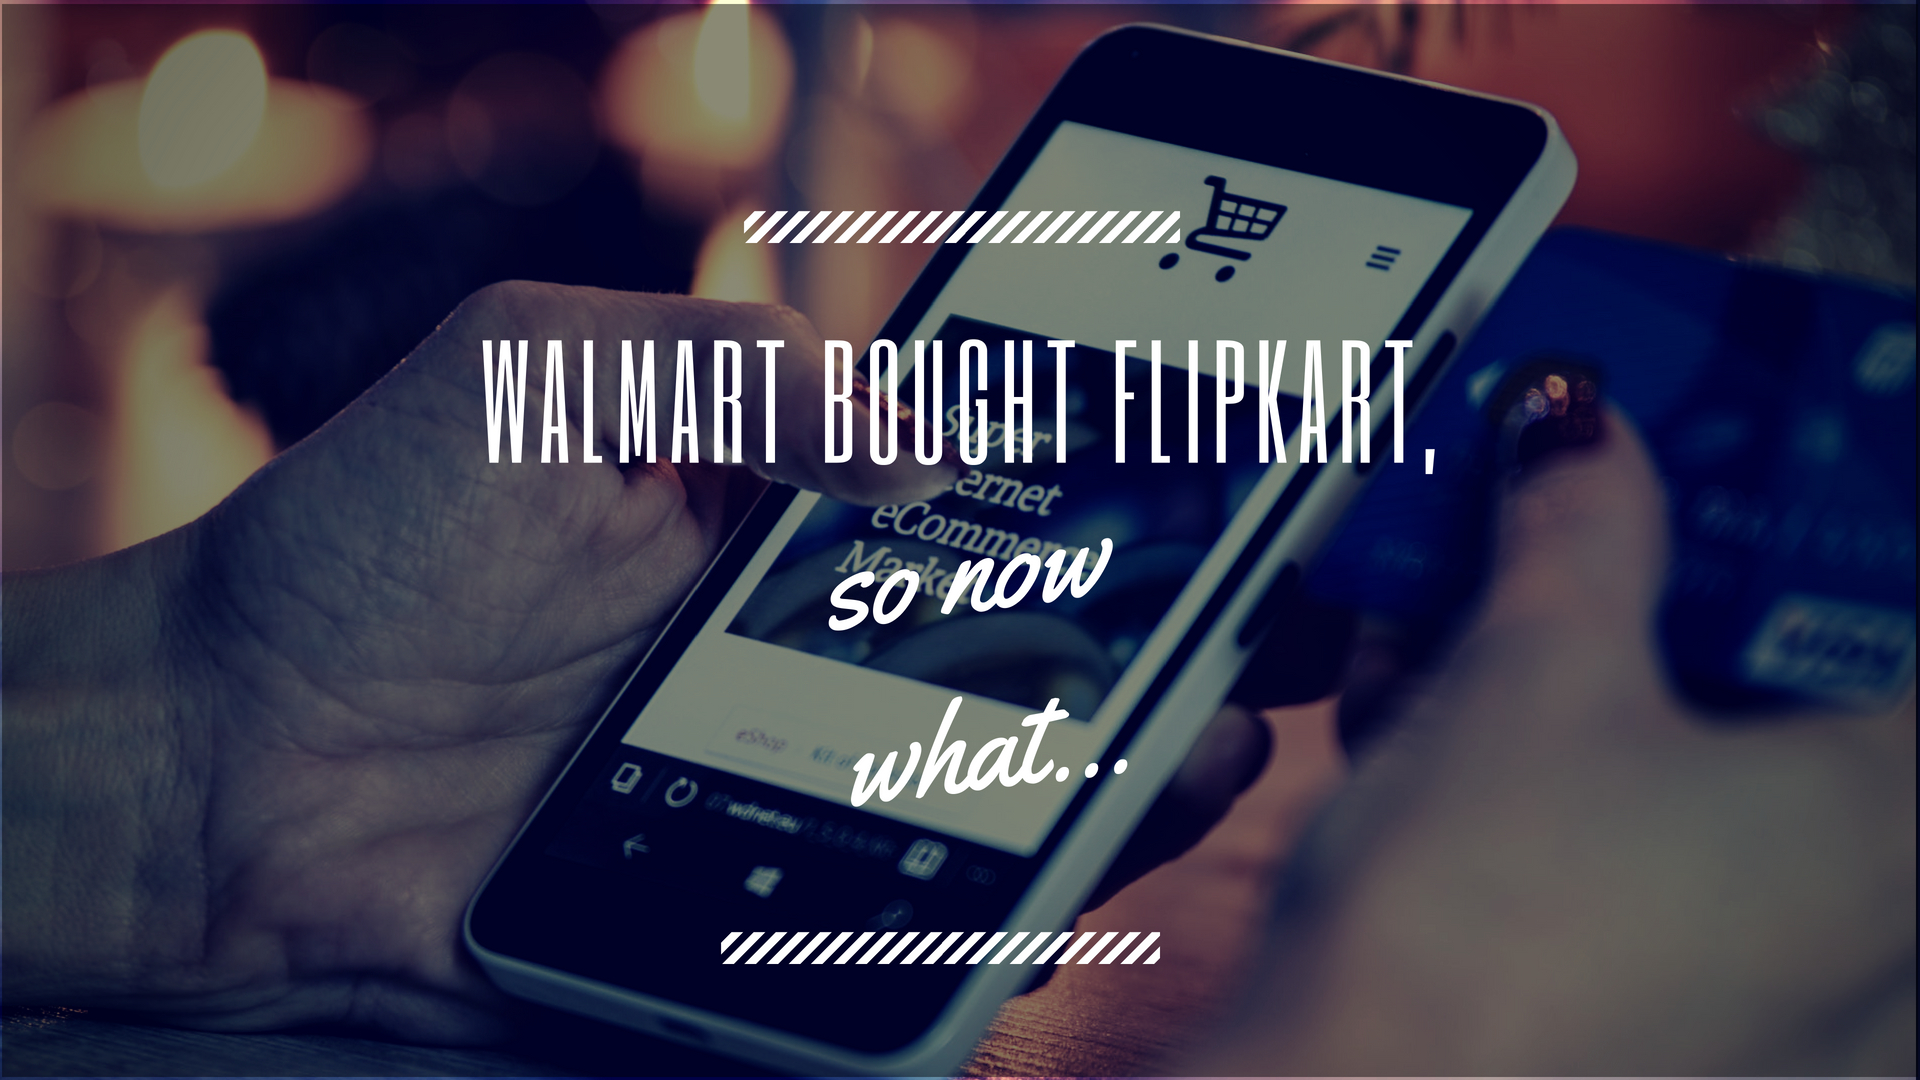 Walmart has bought Flipkart, now what